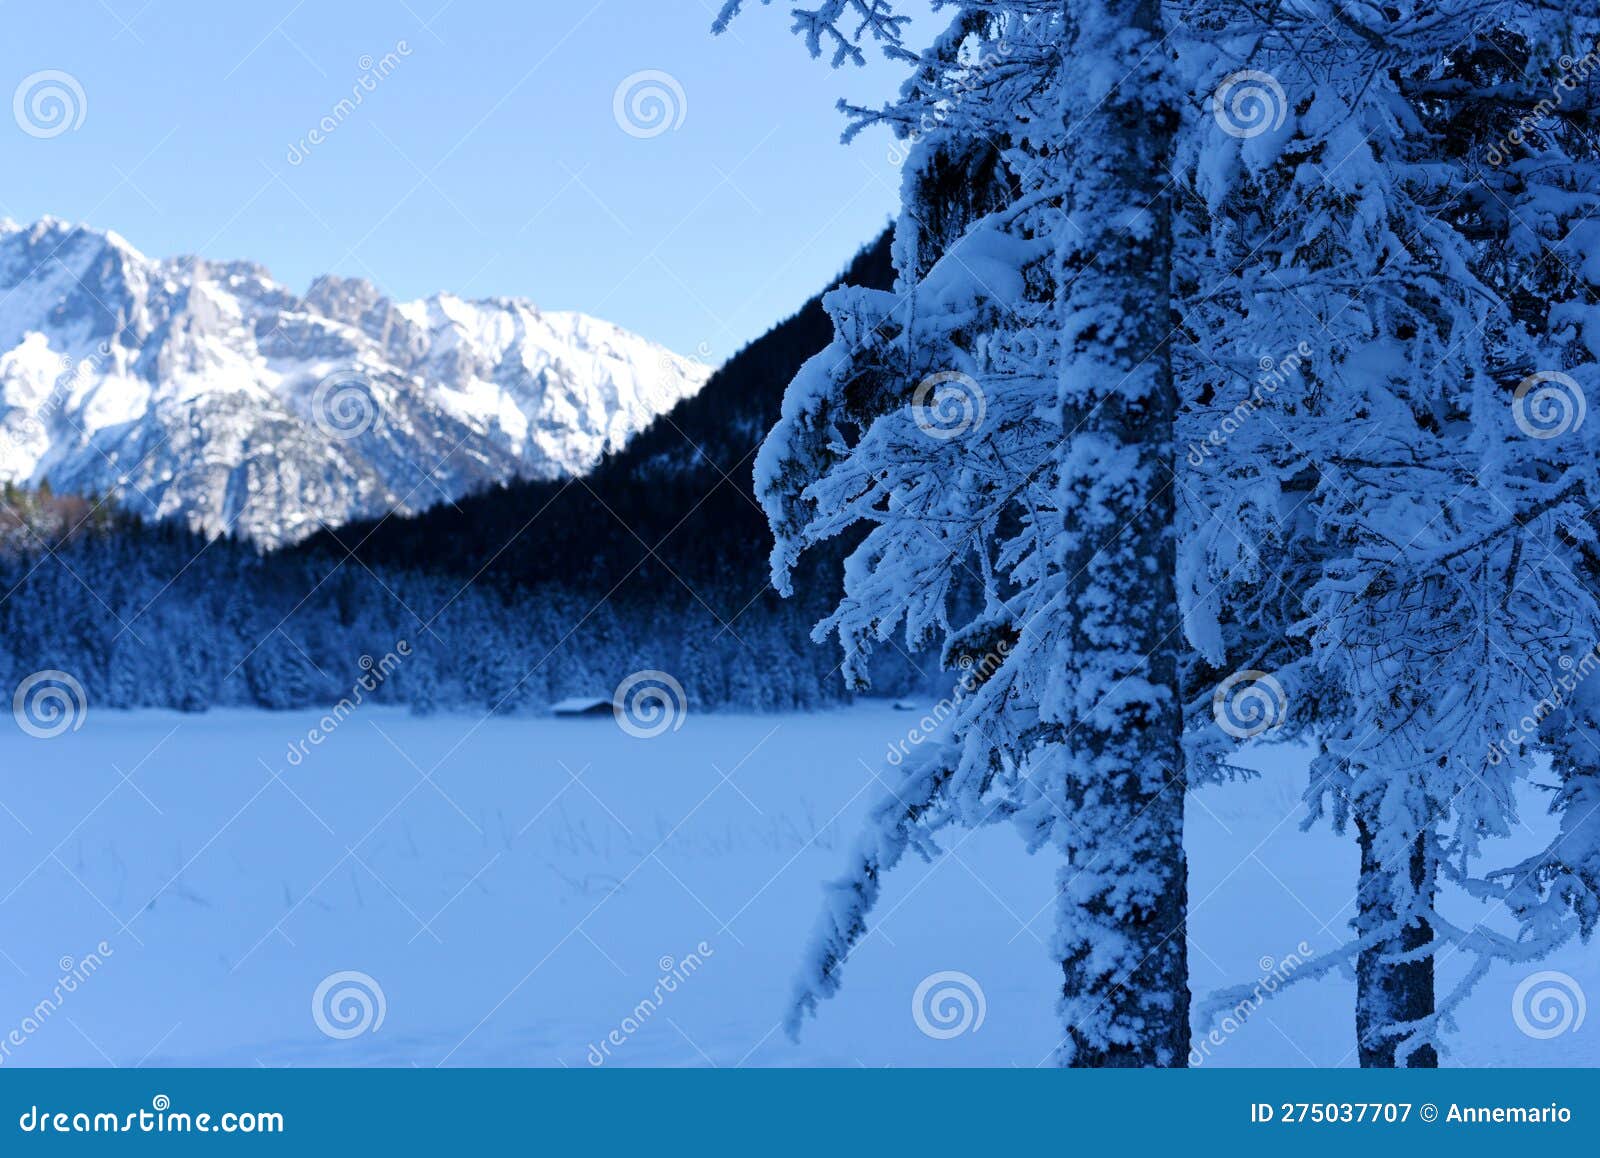 winter wonderland landscape by the lake ferchensee in bavaria, germany